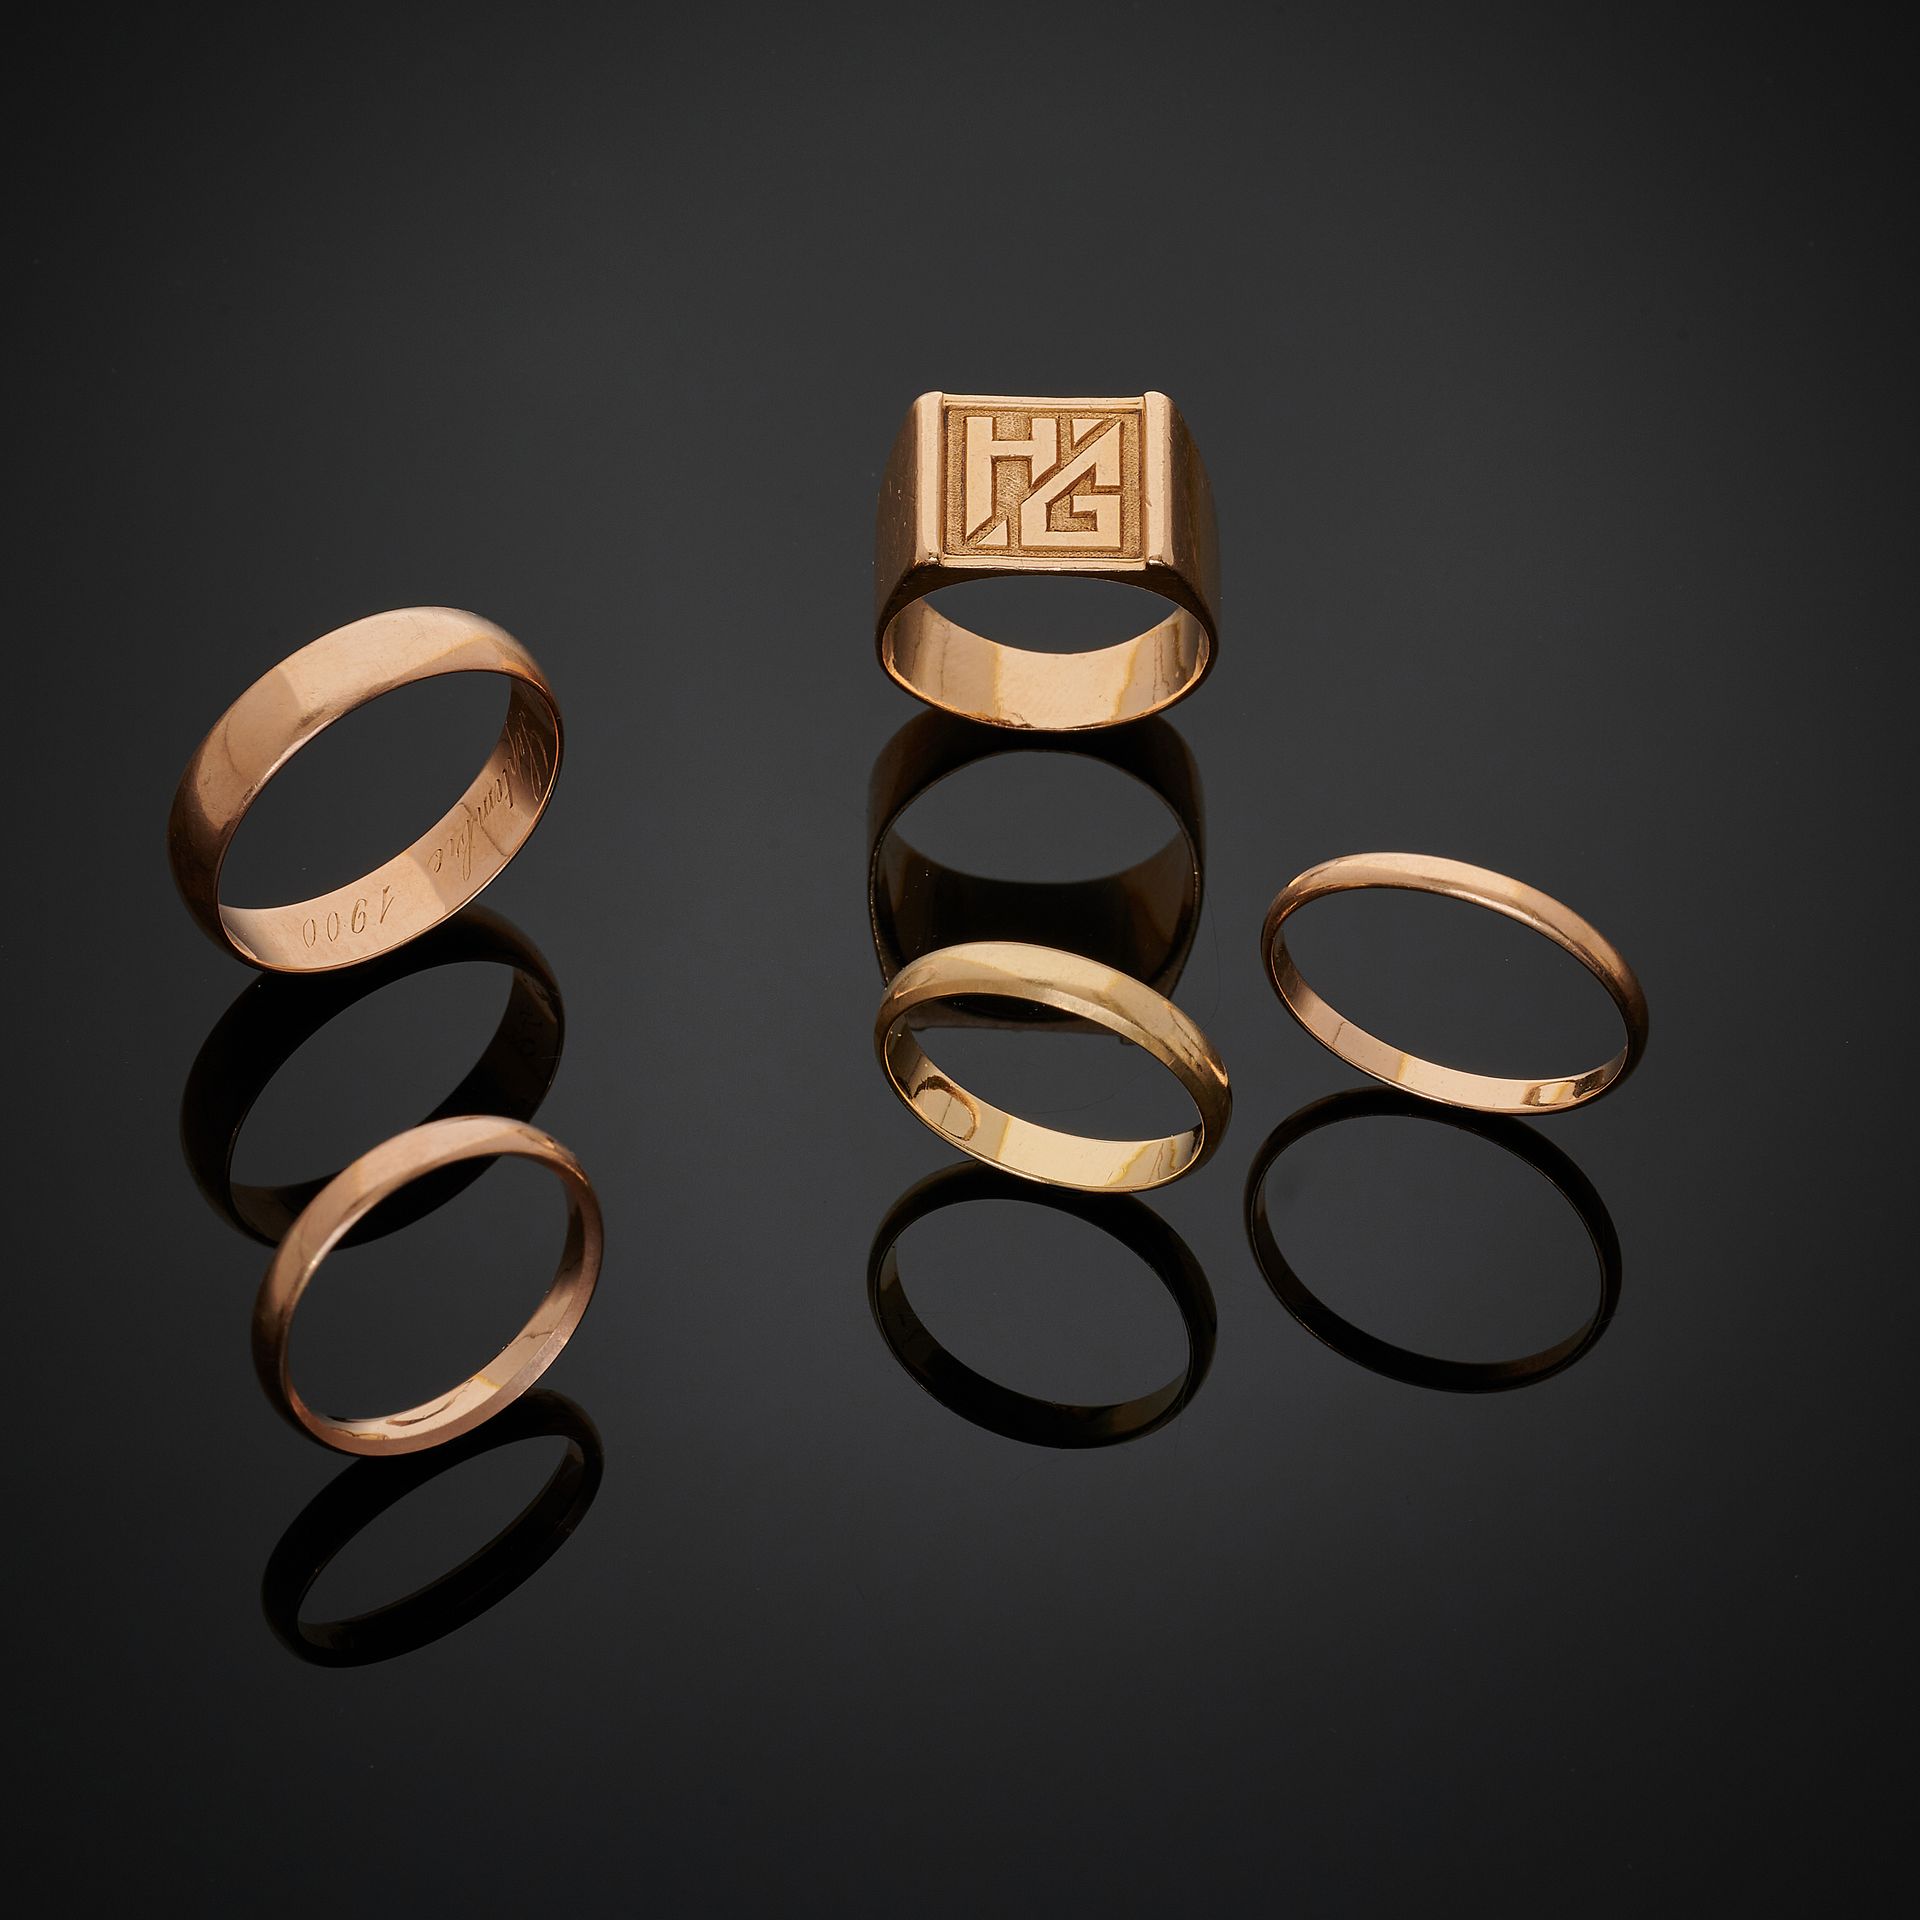 Null 一组750毫米黄金结婚戒指和徽章戒指。
净重：31.8克。